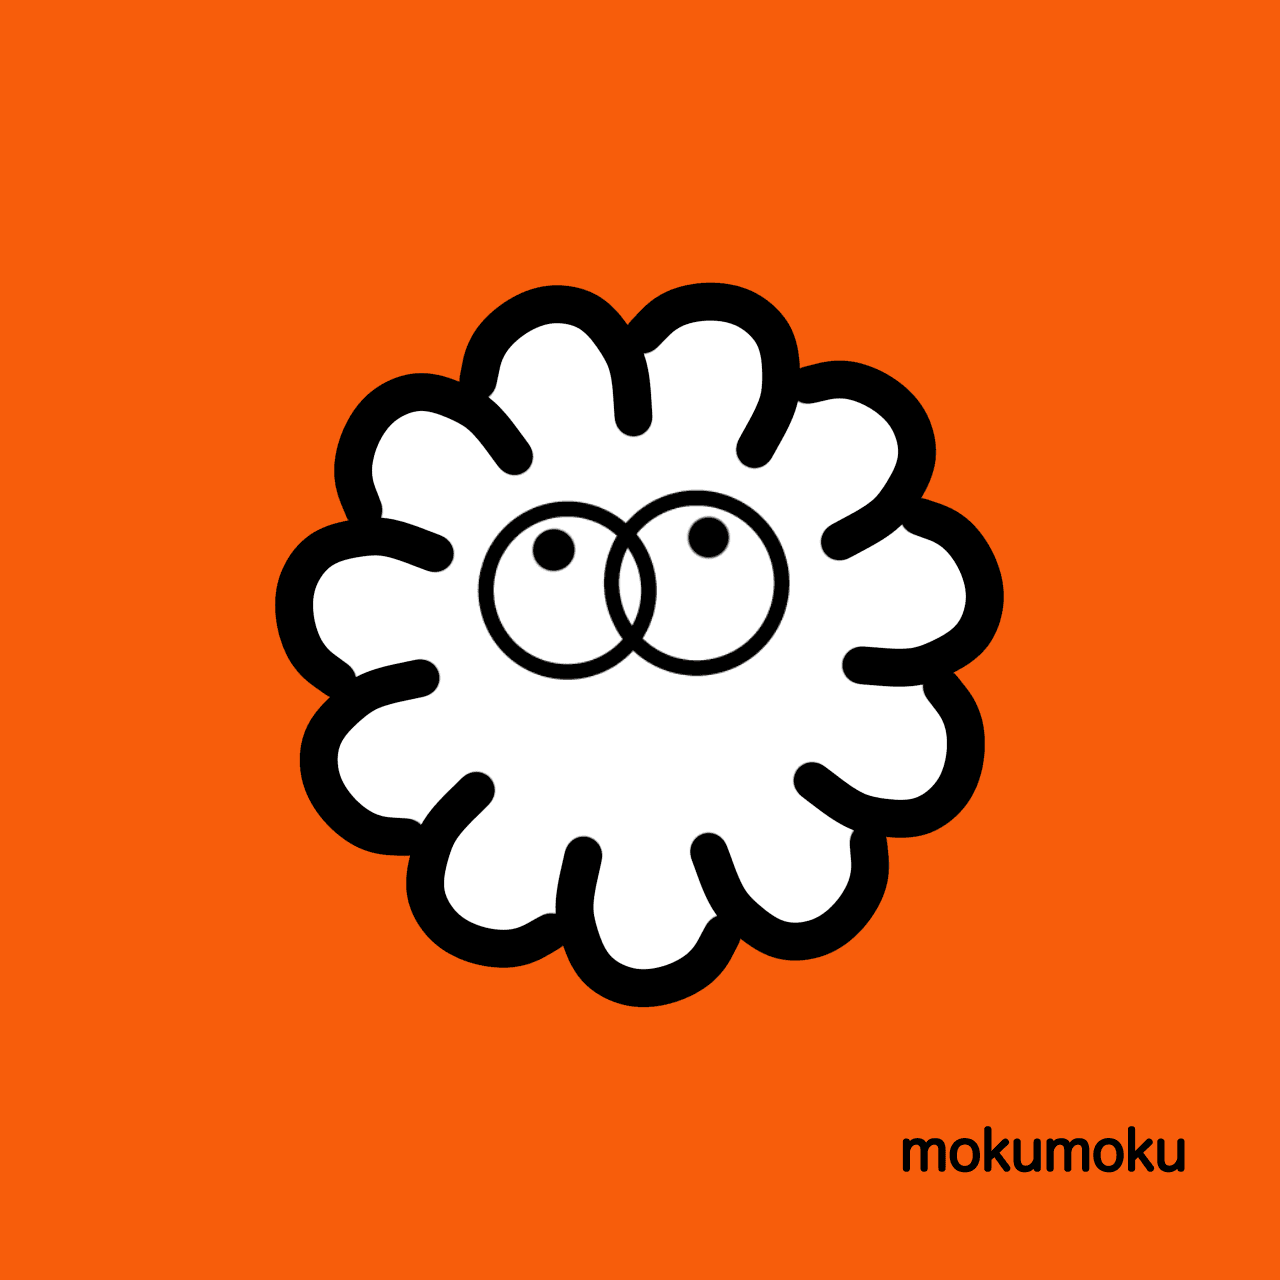 mokumoku #008